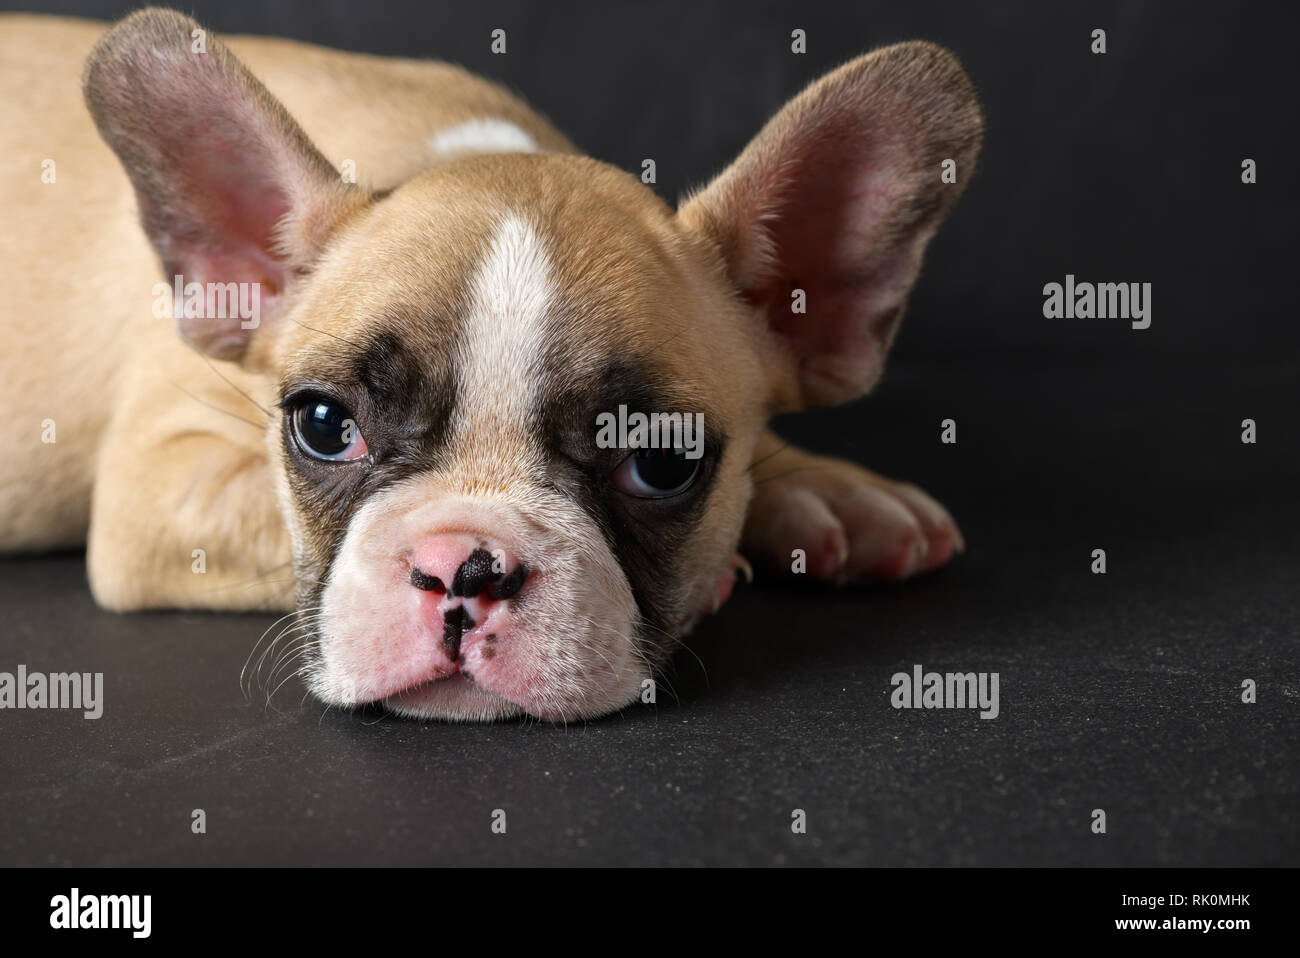 Cute french bulldog puppy sleep on black stone background, Pet animal concept Stock Photo